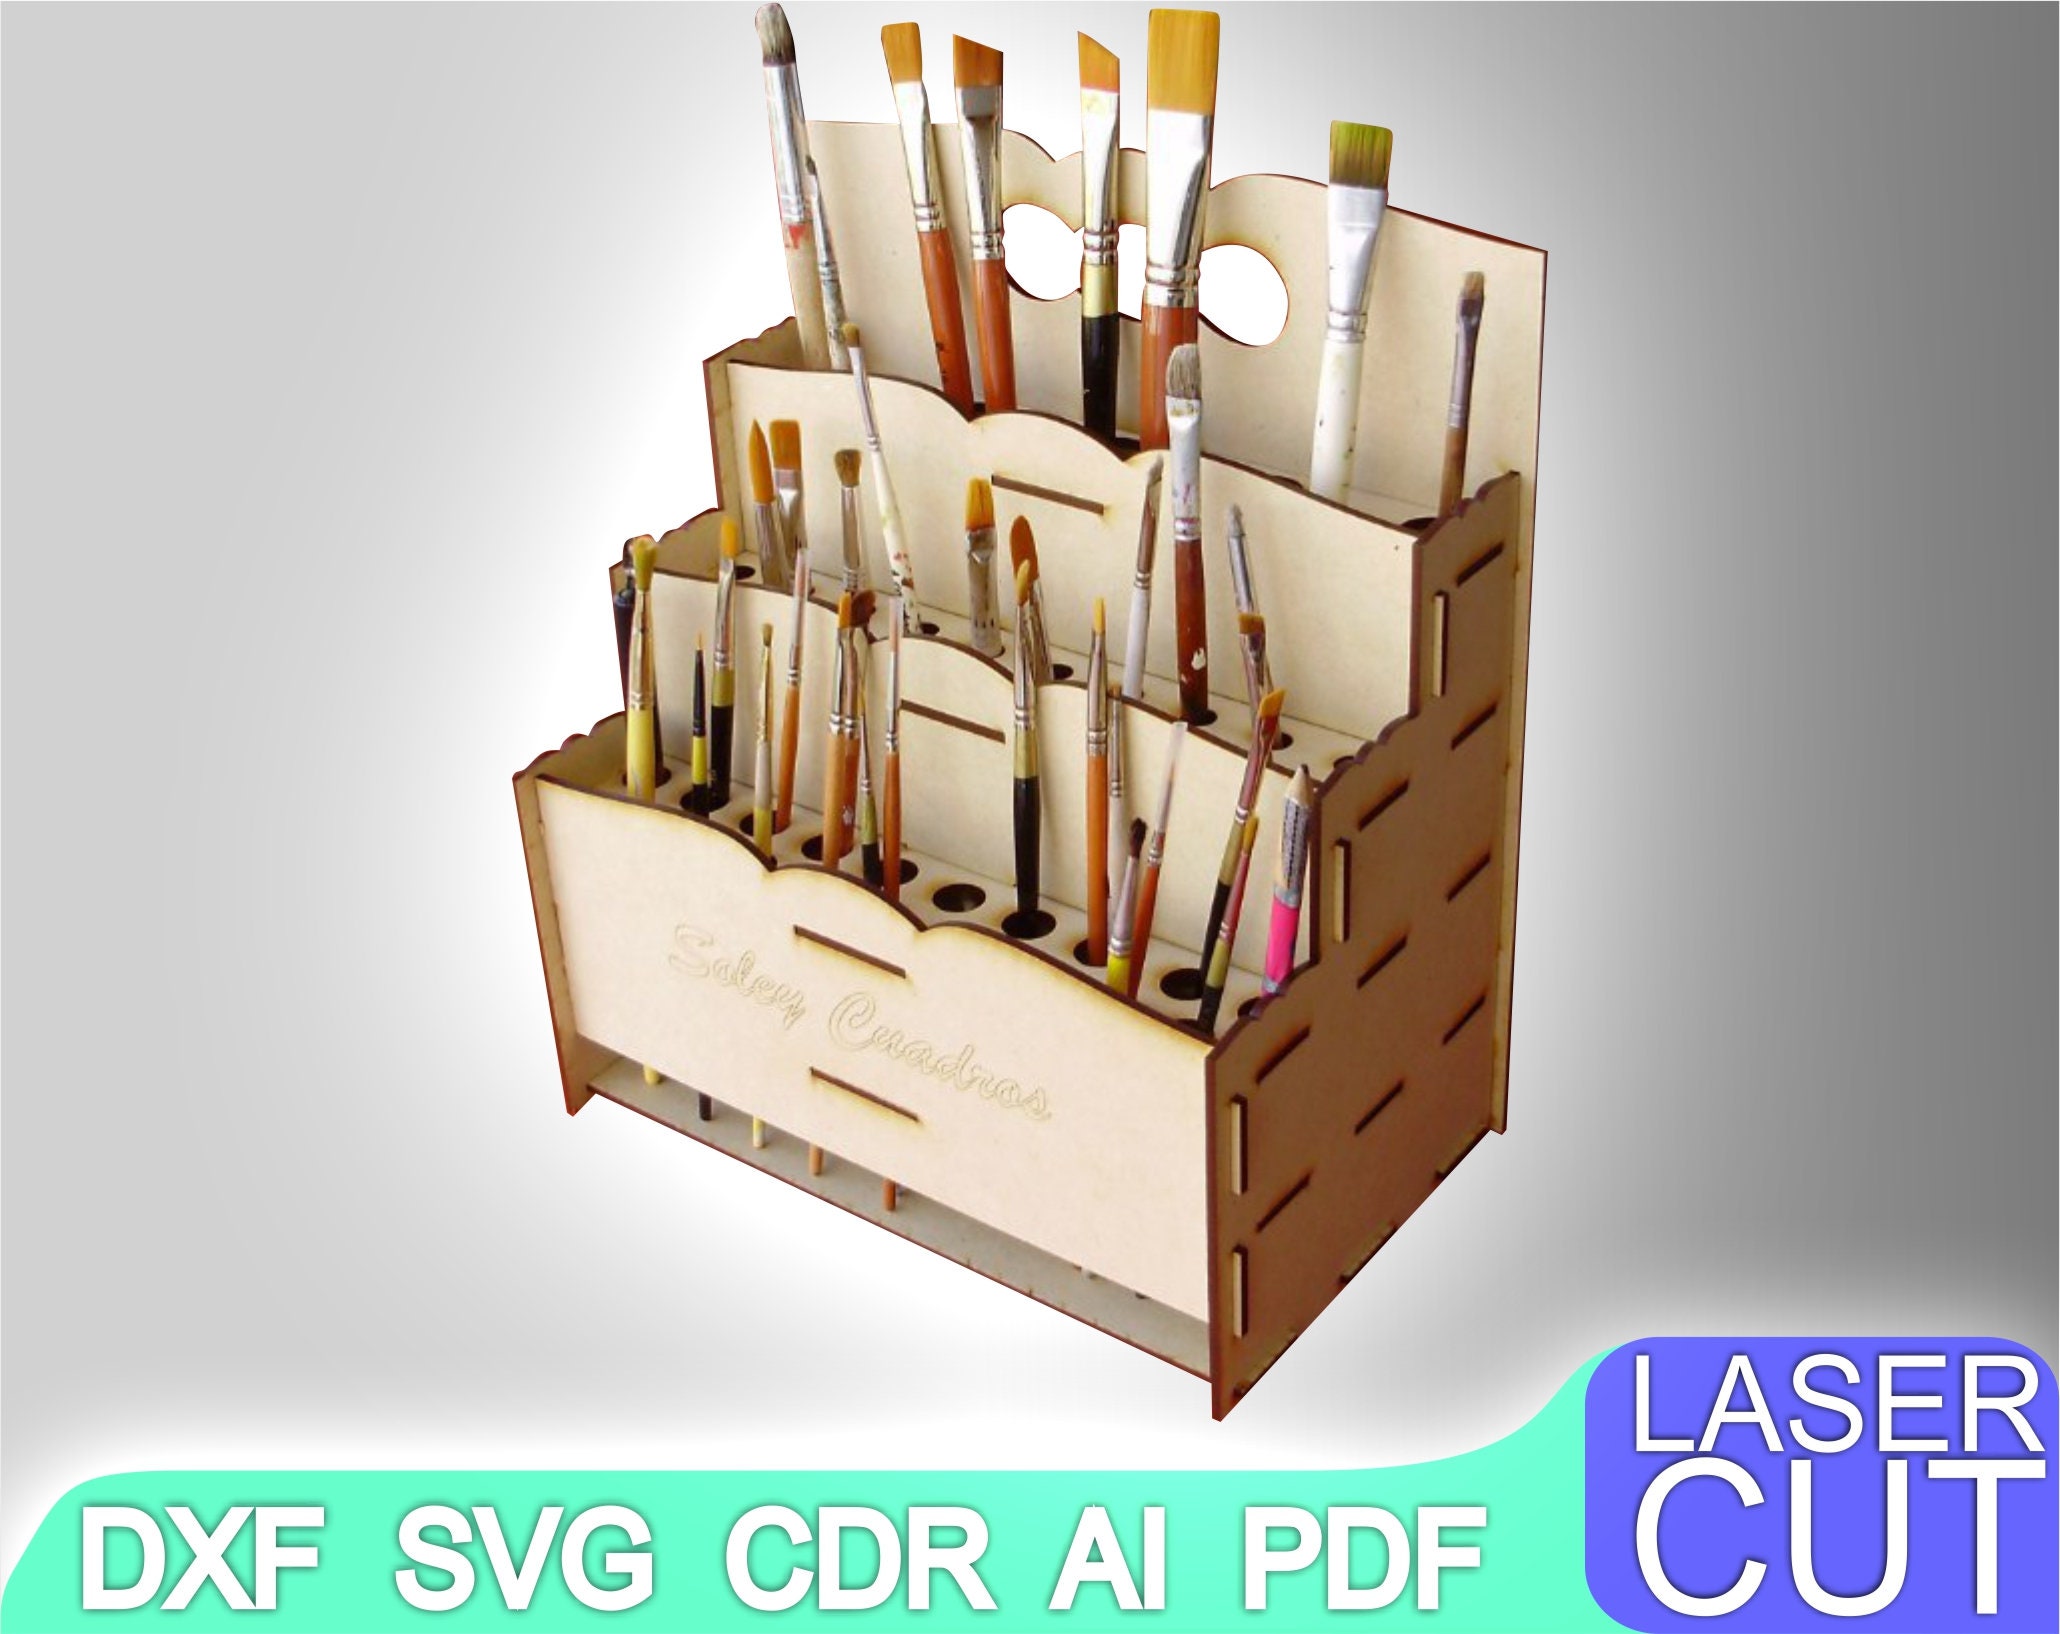 Hobby organizer brush/glue/tweezer holder | Laser cut files | Modular | 2D  DXF SVG CDR files | Glowforge